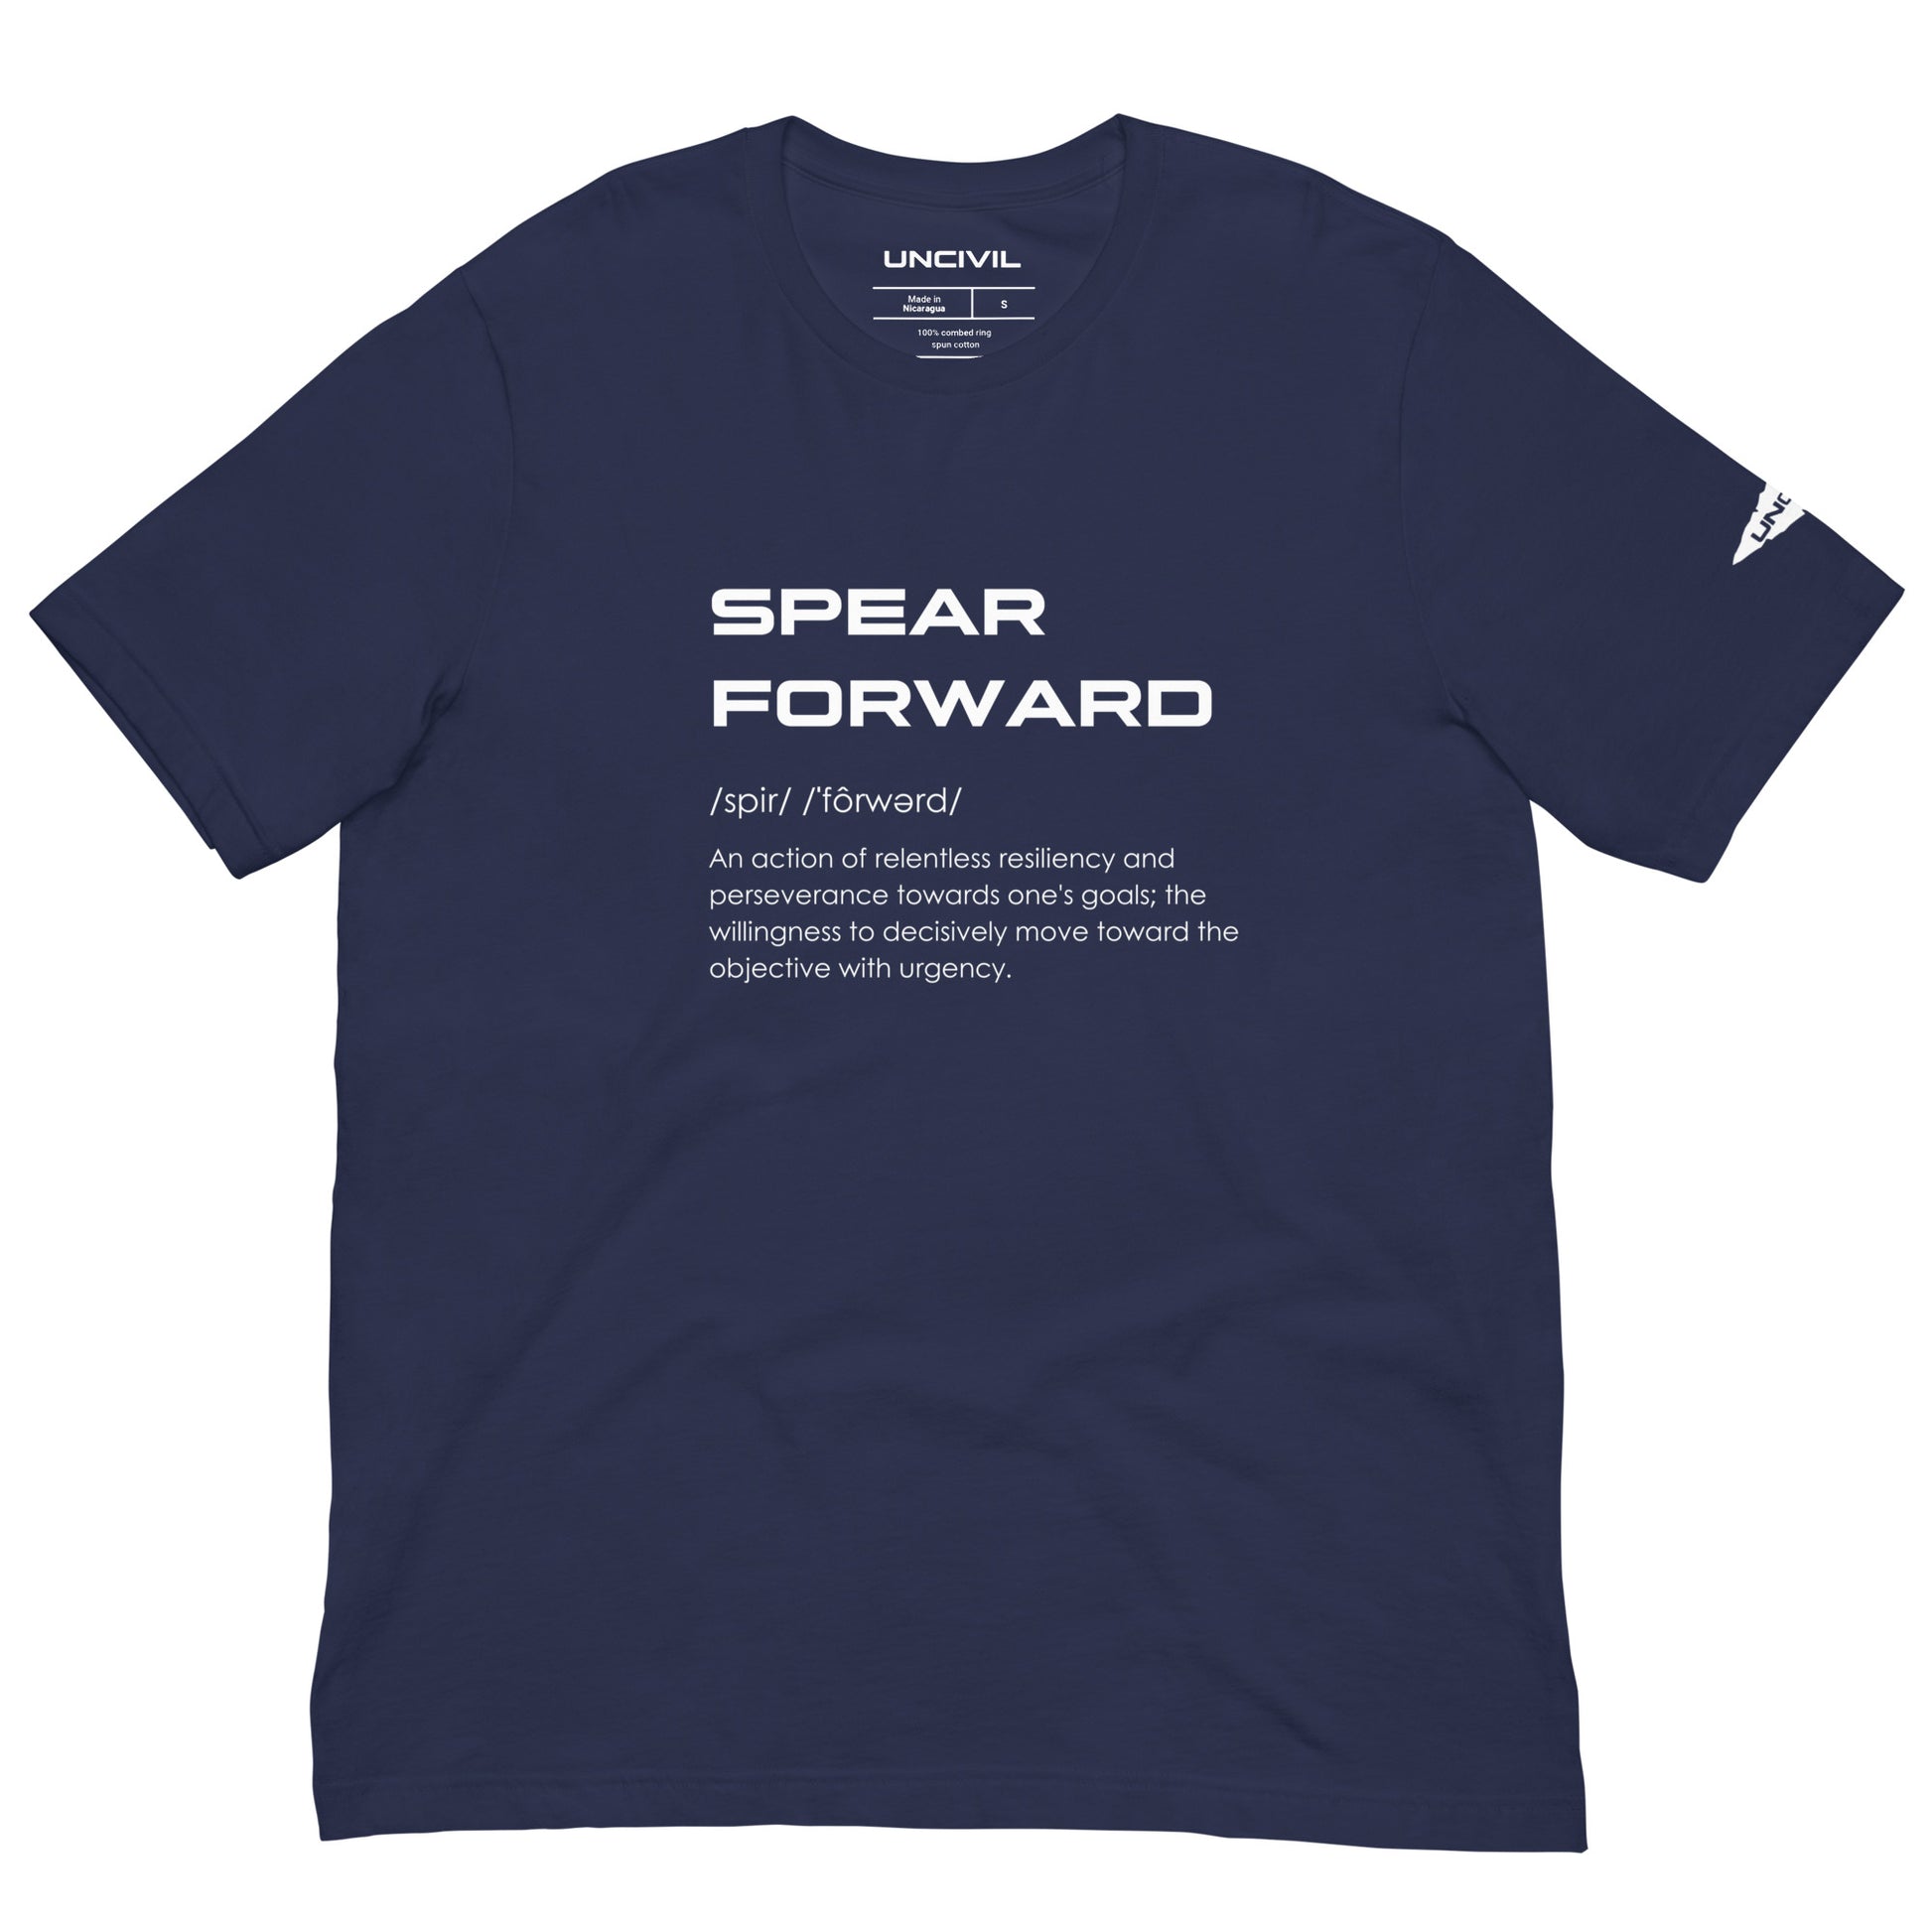 SPEAR Forward definition UNCIVIL navy shirt